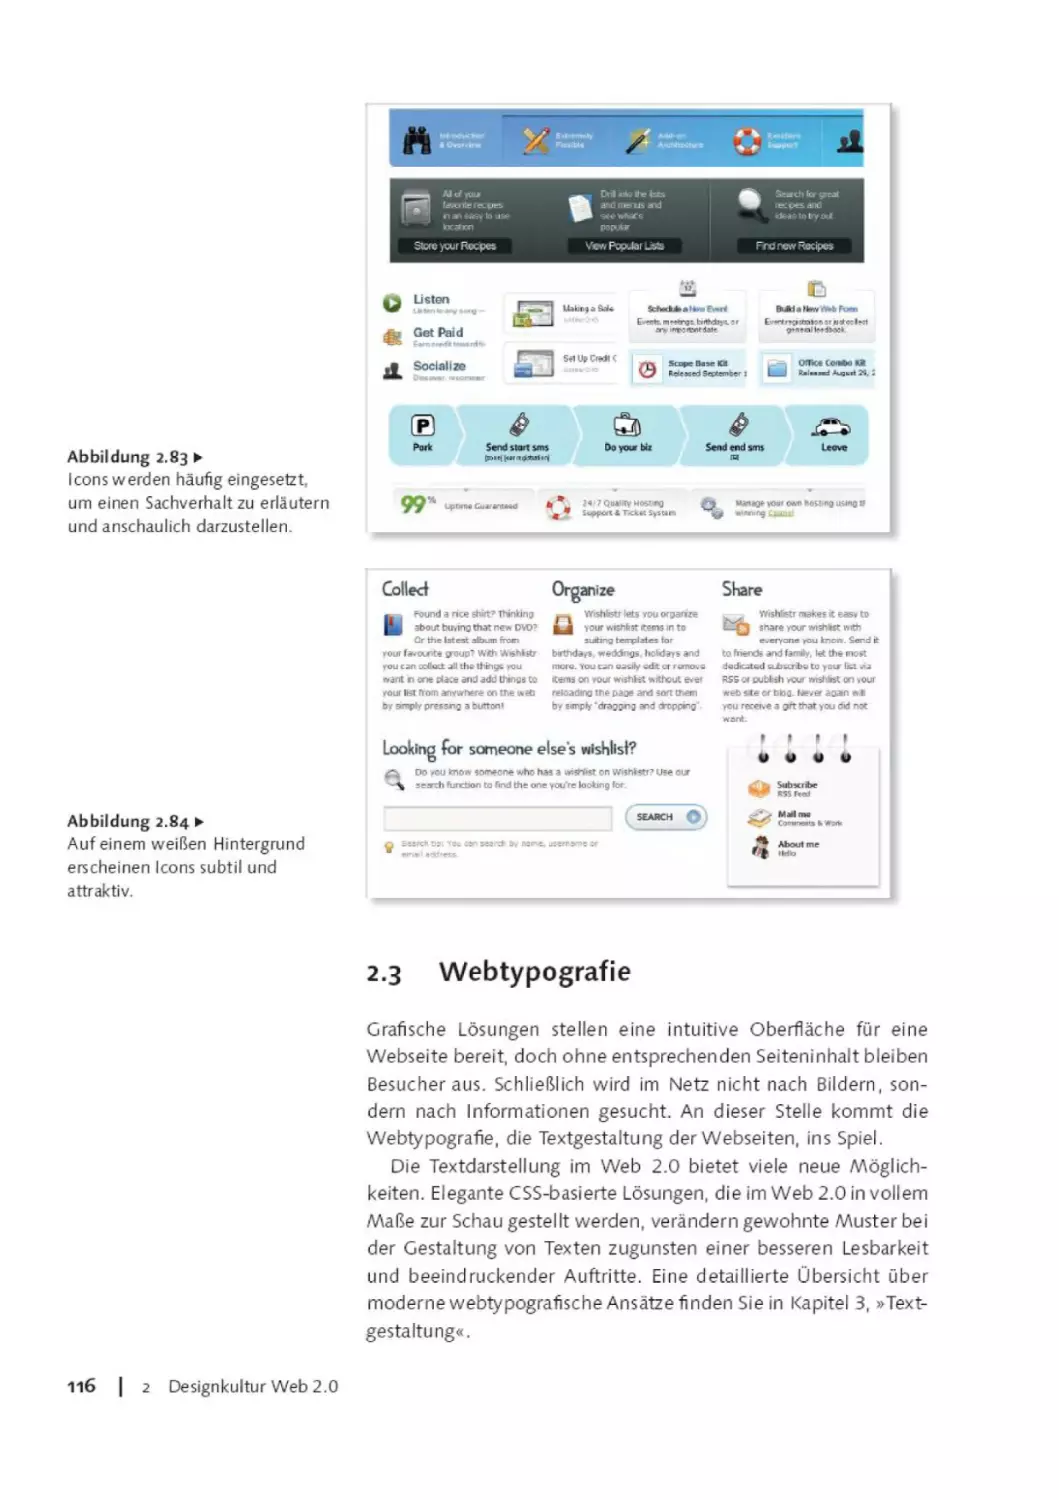 2.3       Webtypografie